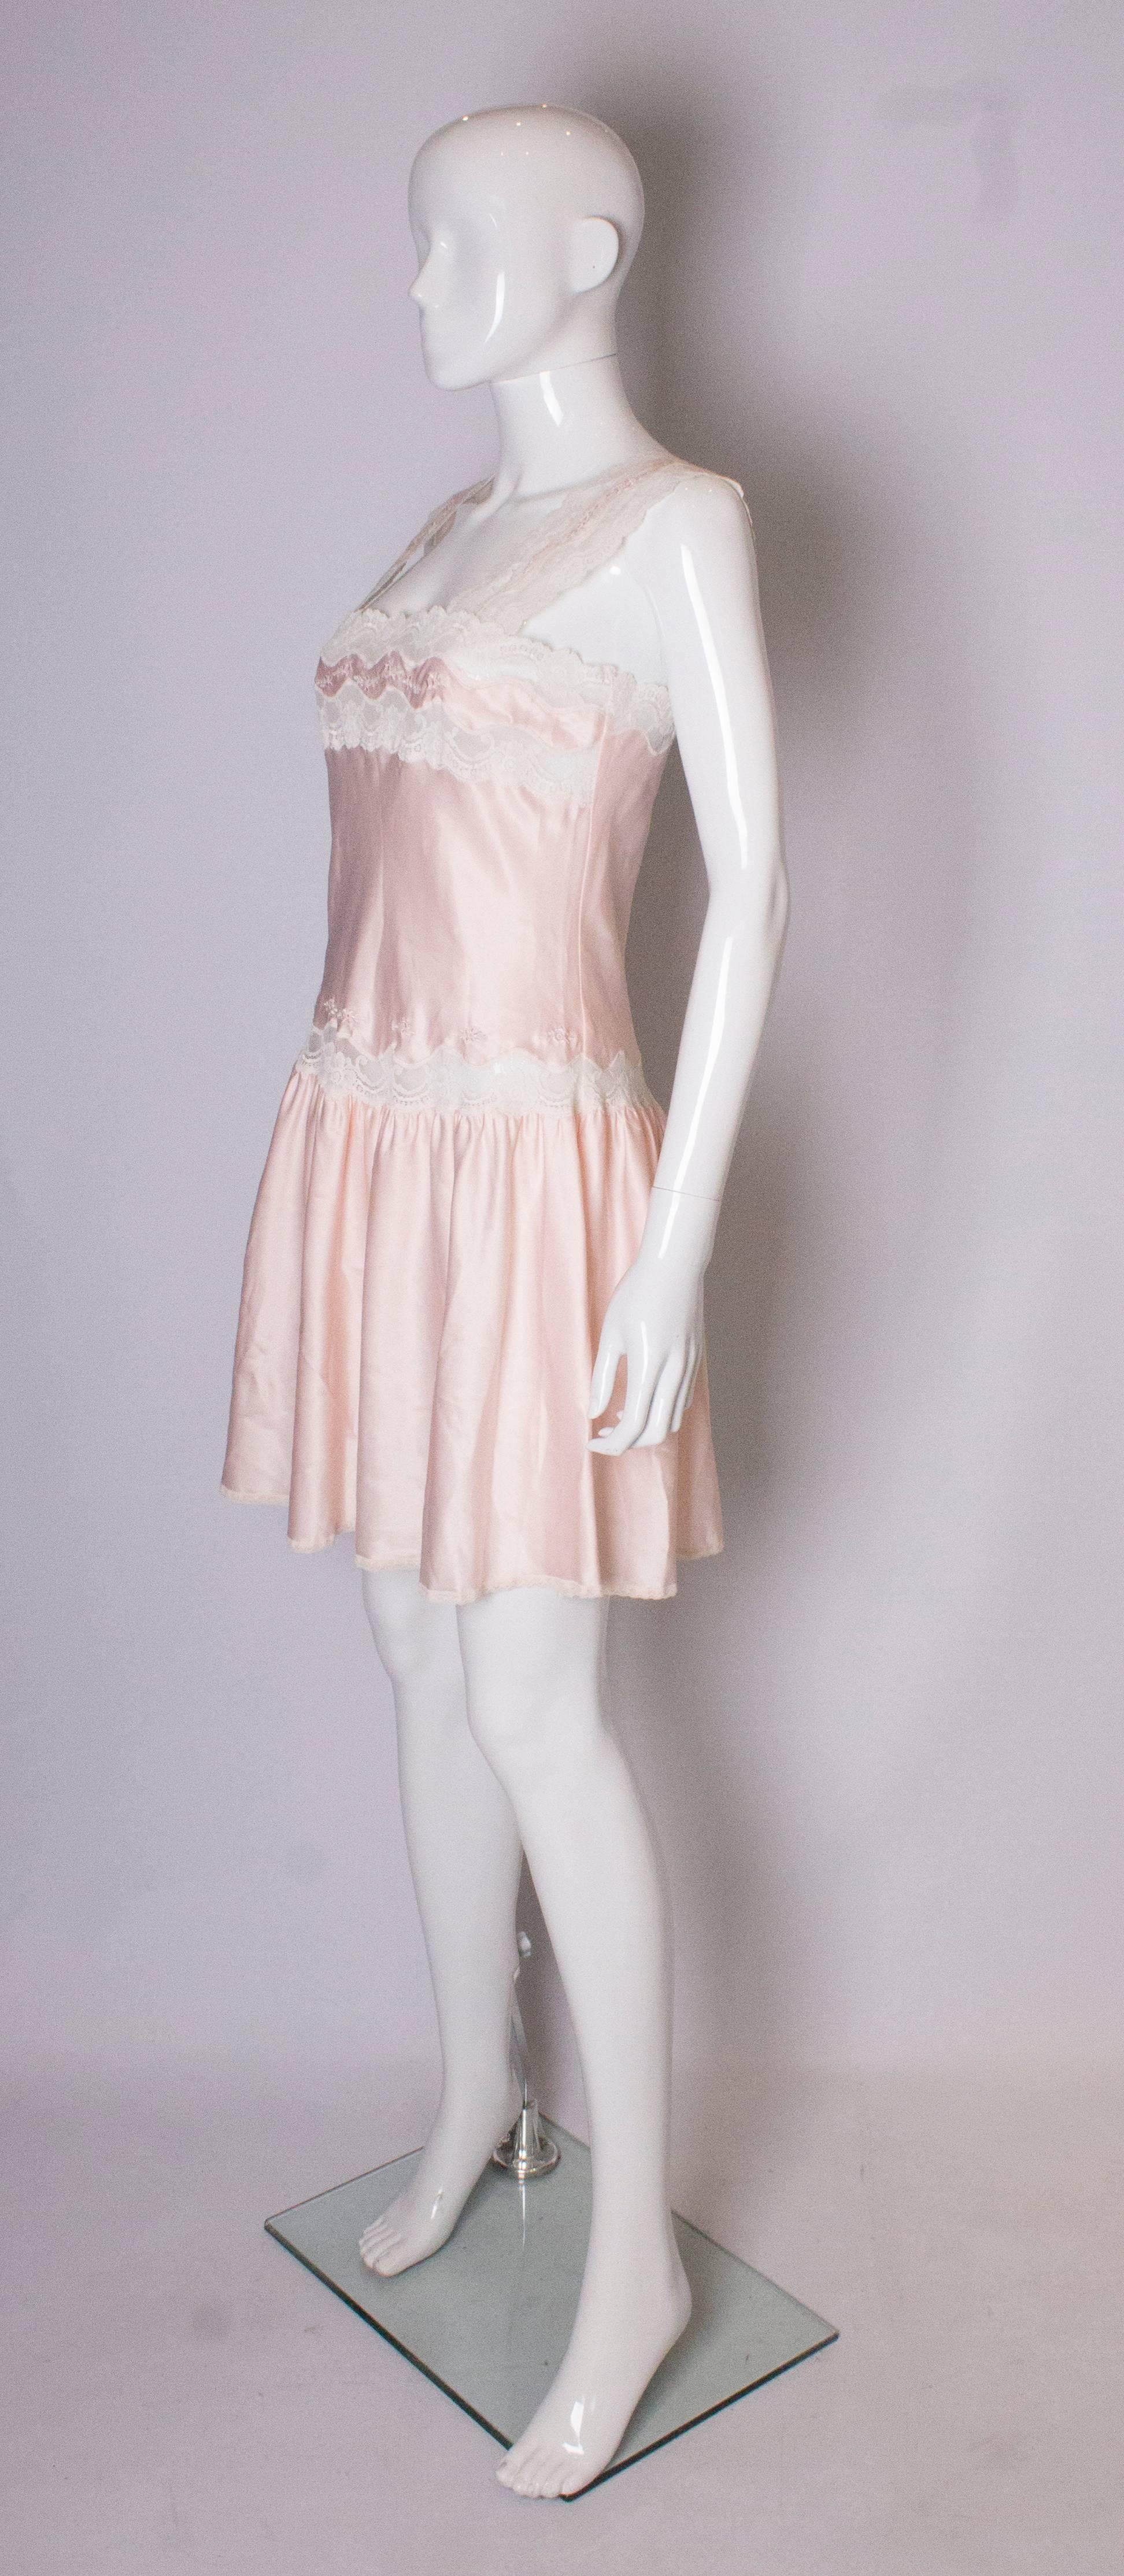 Beige Vintage Pink Nightdress or Dress